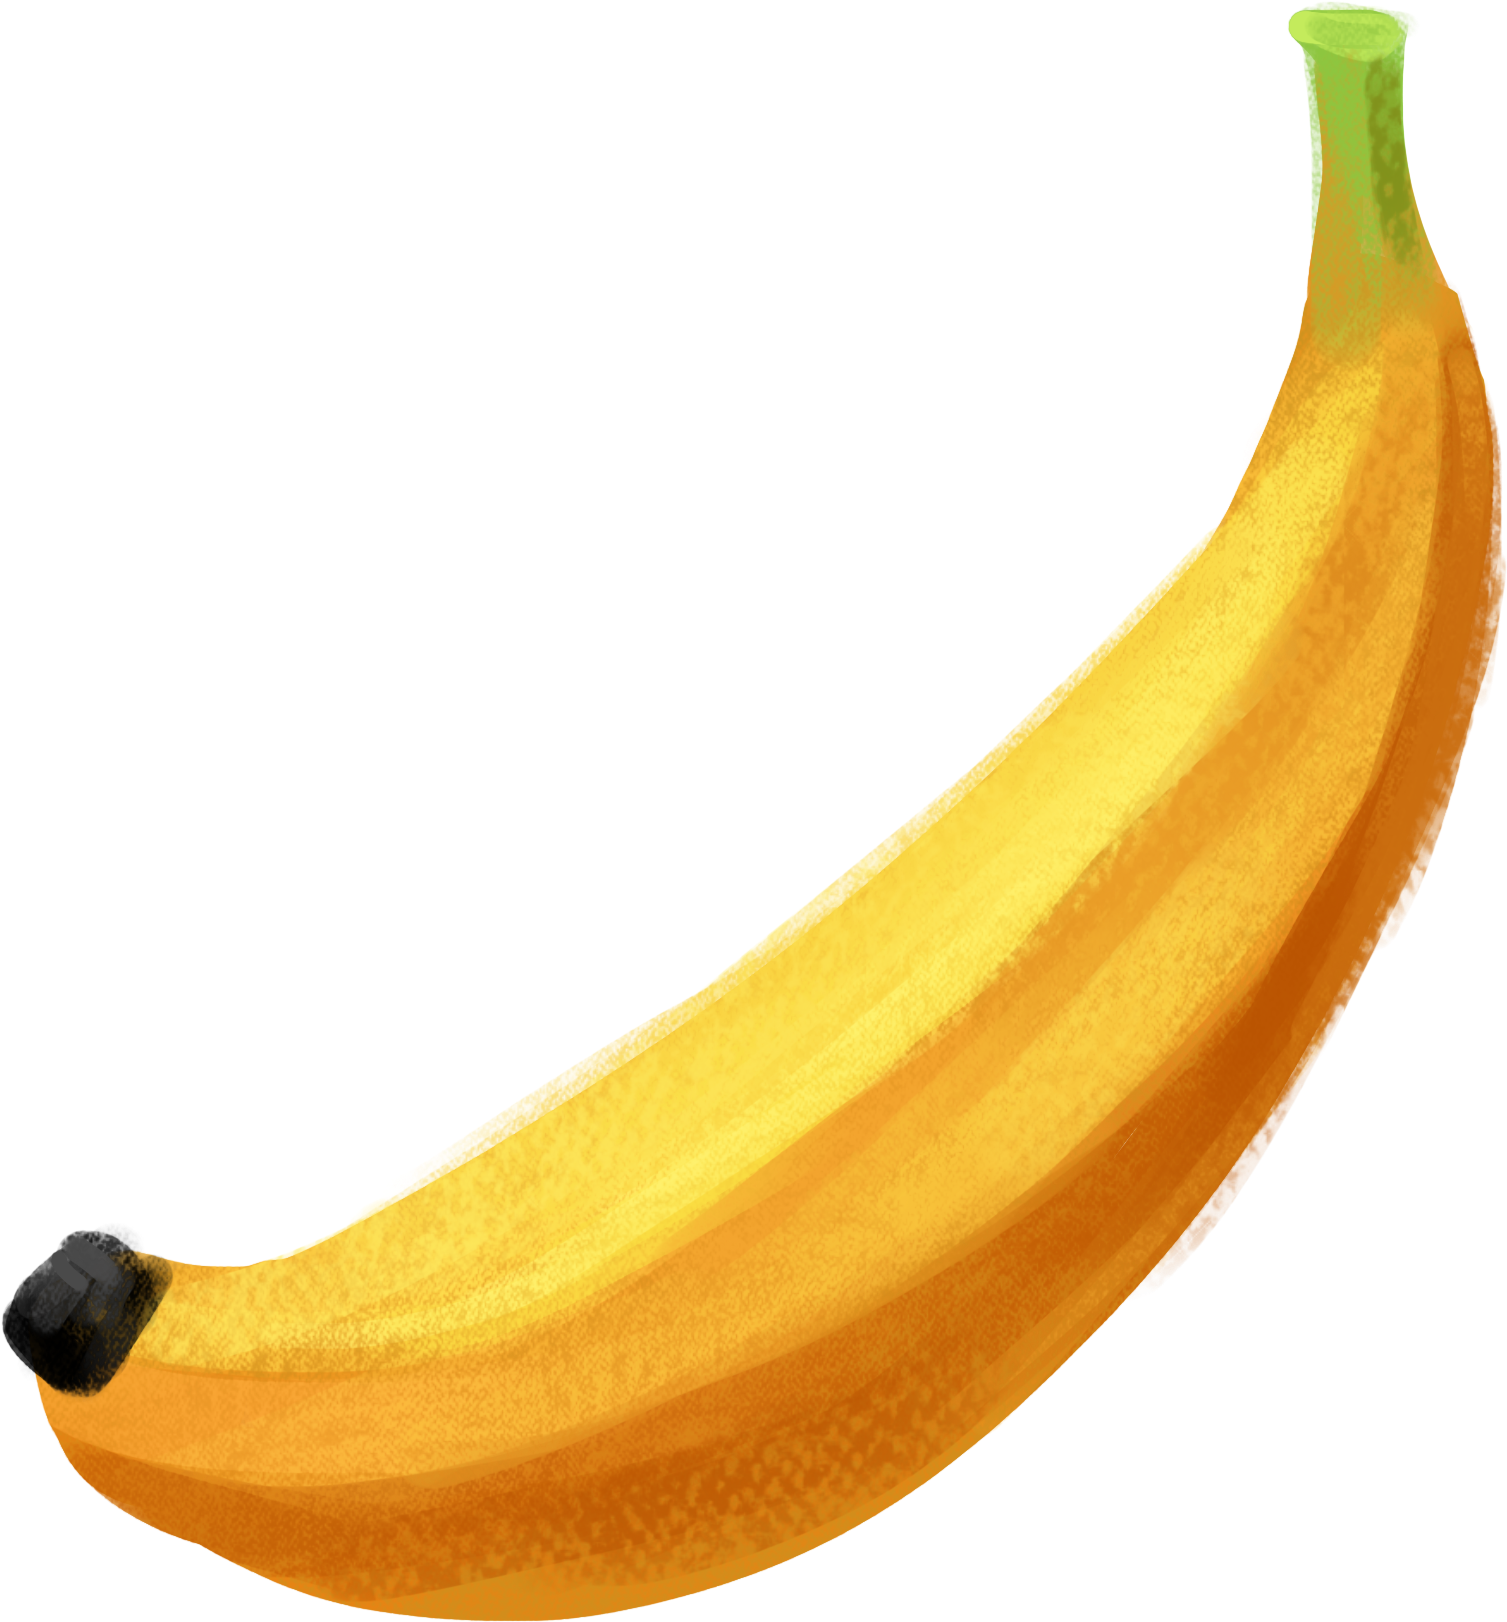 Yellow Banana Illustration Drawed With Crayons Clipart - กล้วย วาด (2000x2000)